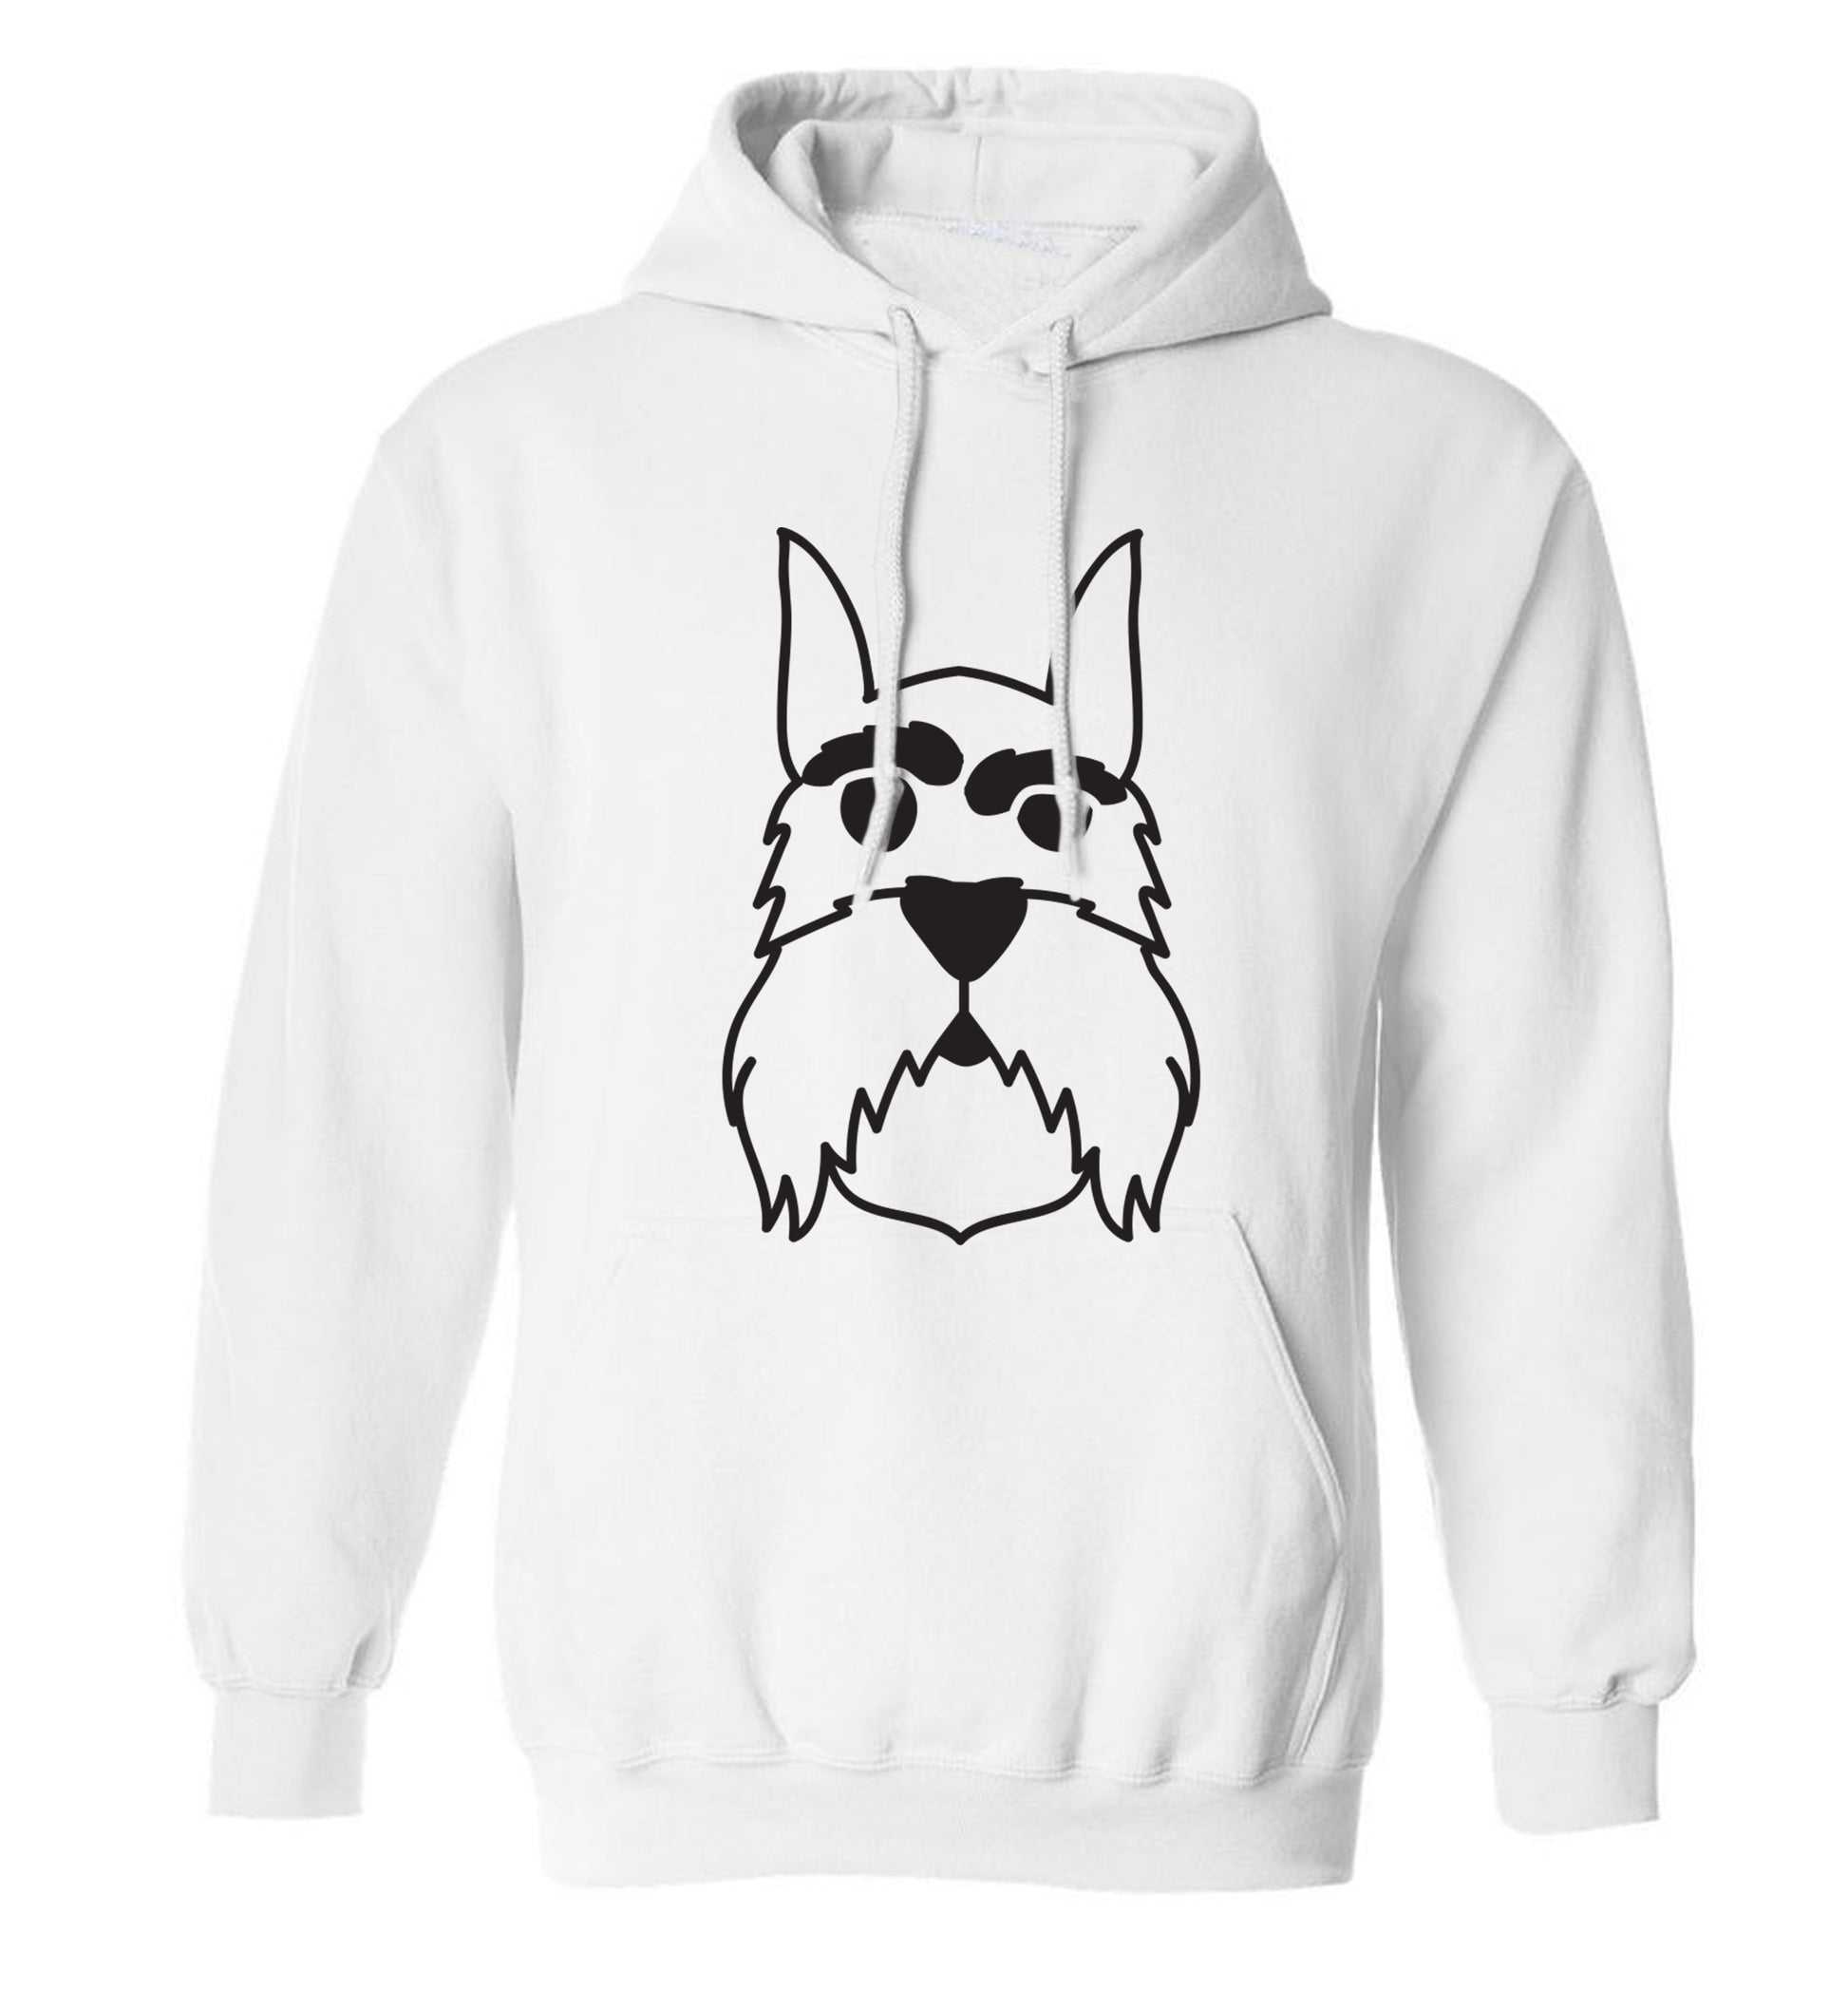 Schnauzer dog illustration adults unisex white hoodie 2XL